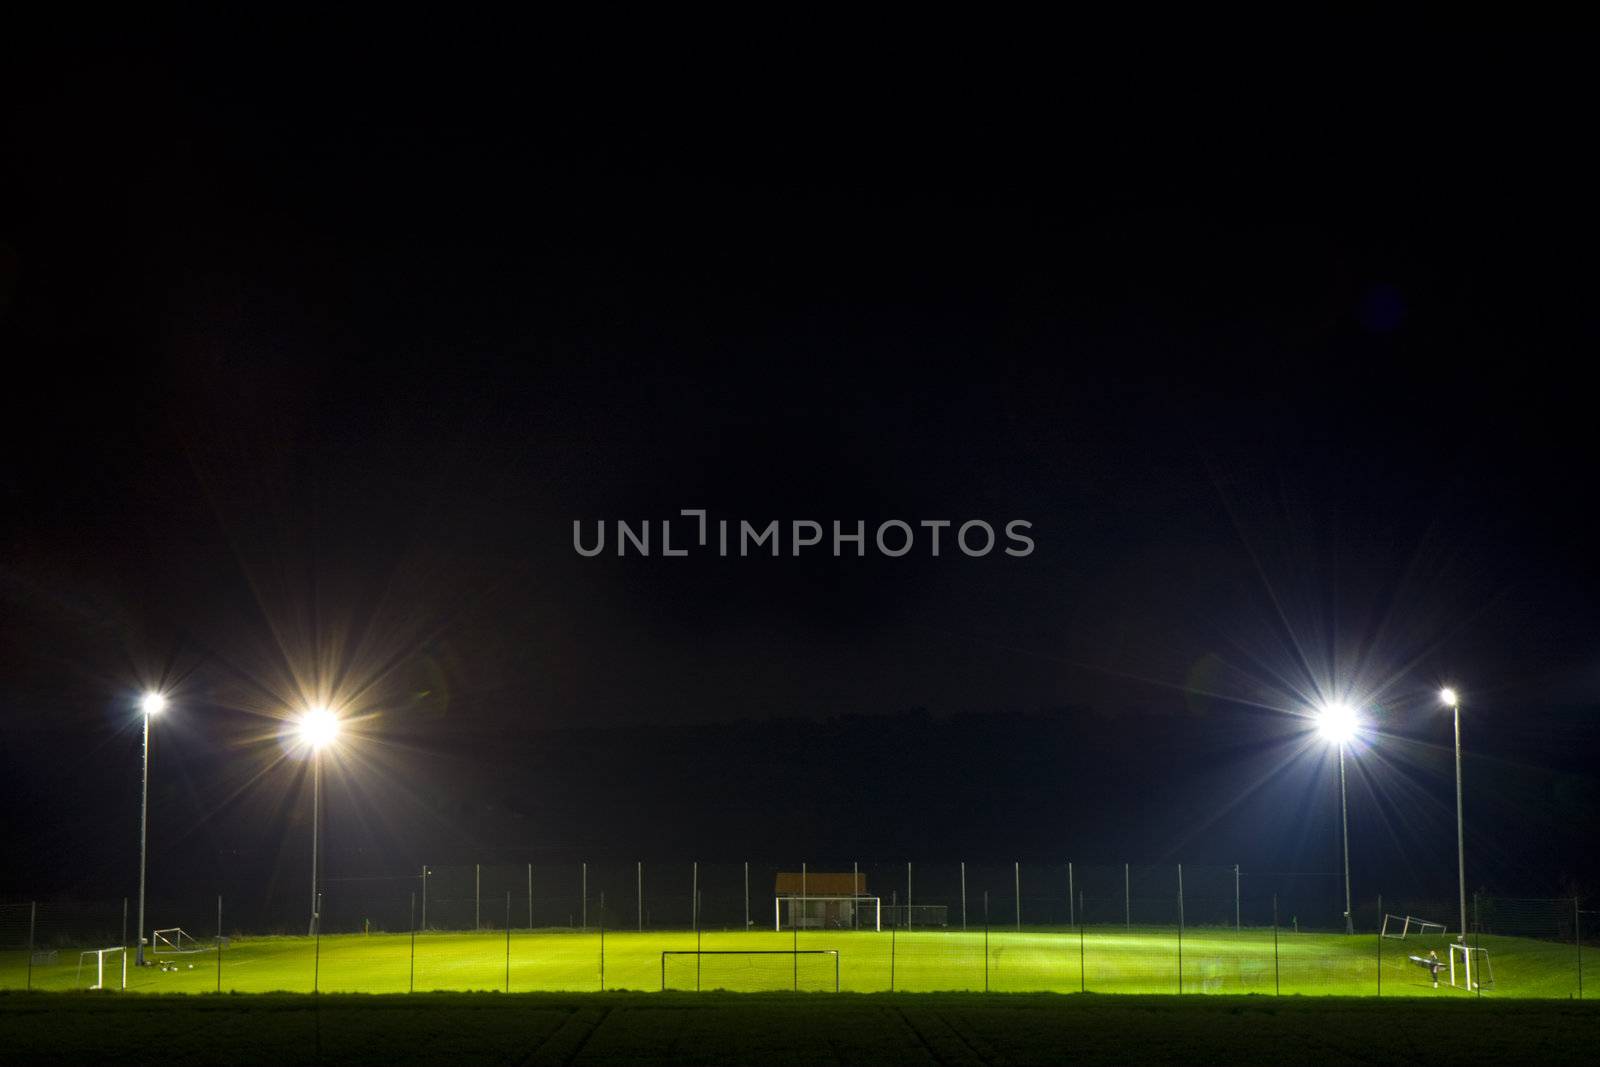 empty soccer pitch illuminated at night